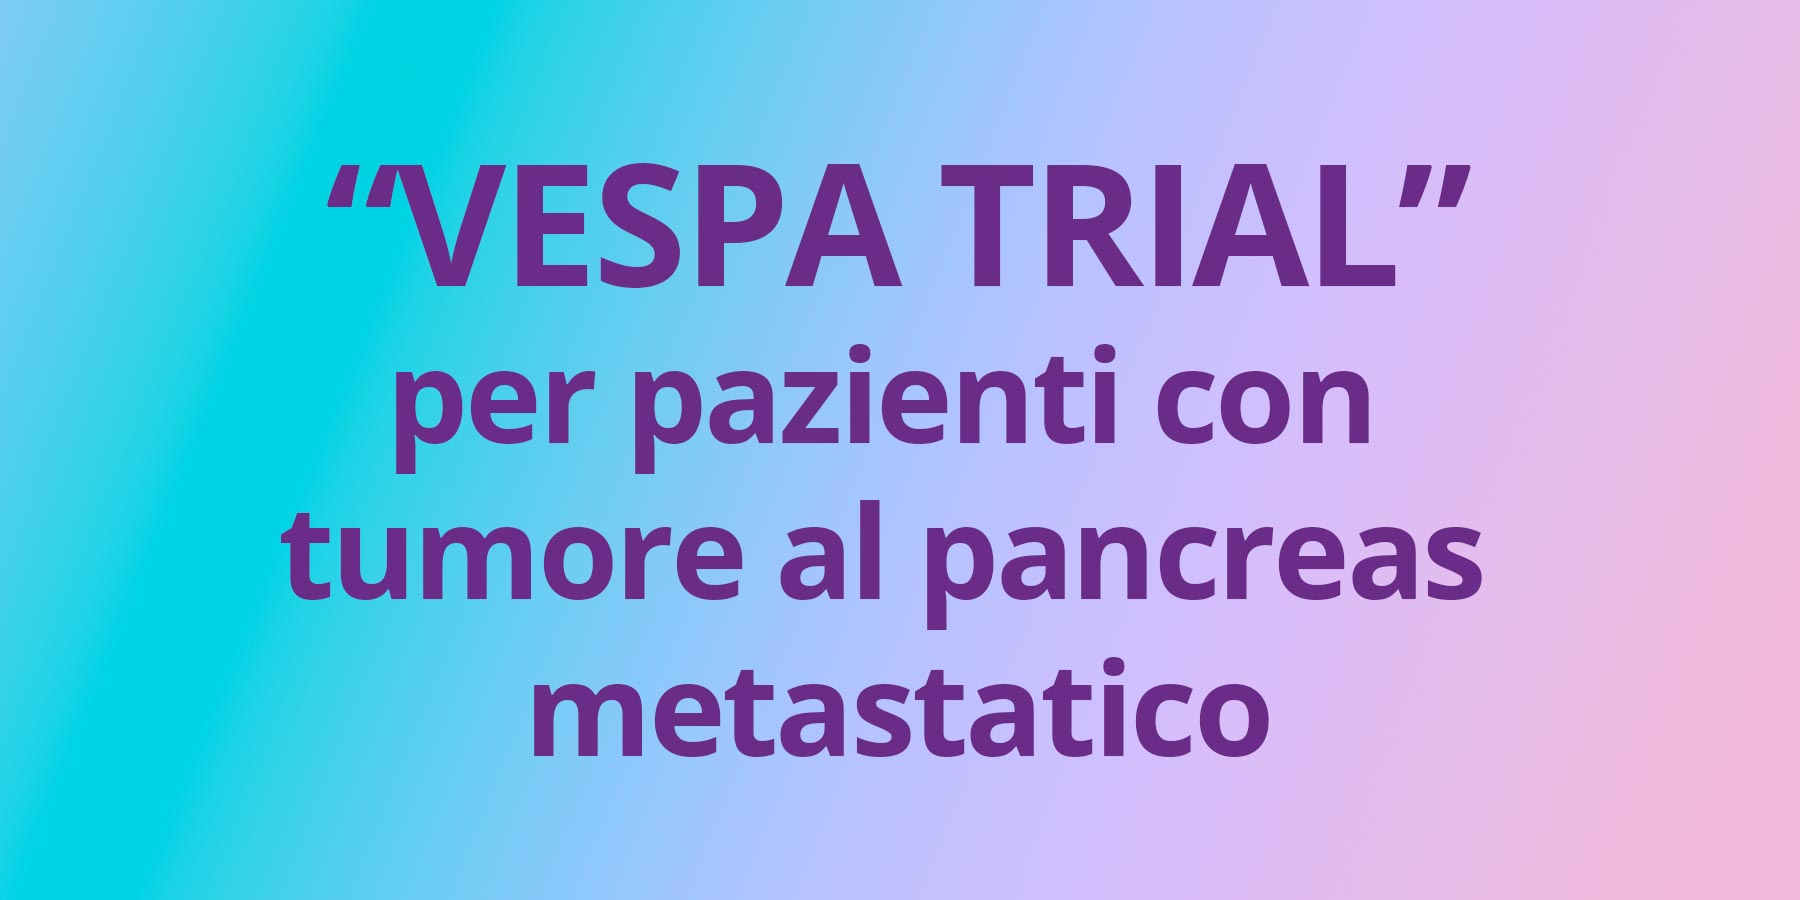 VESPA-TRIAL-tumore-pancreas-metastatico